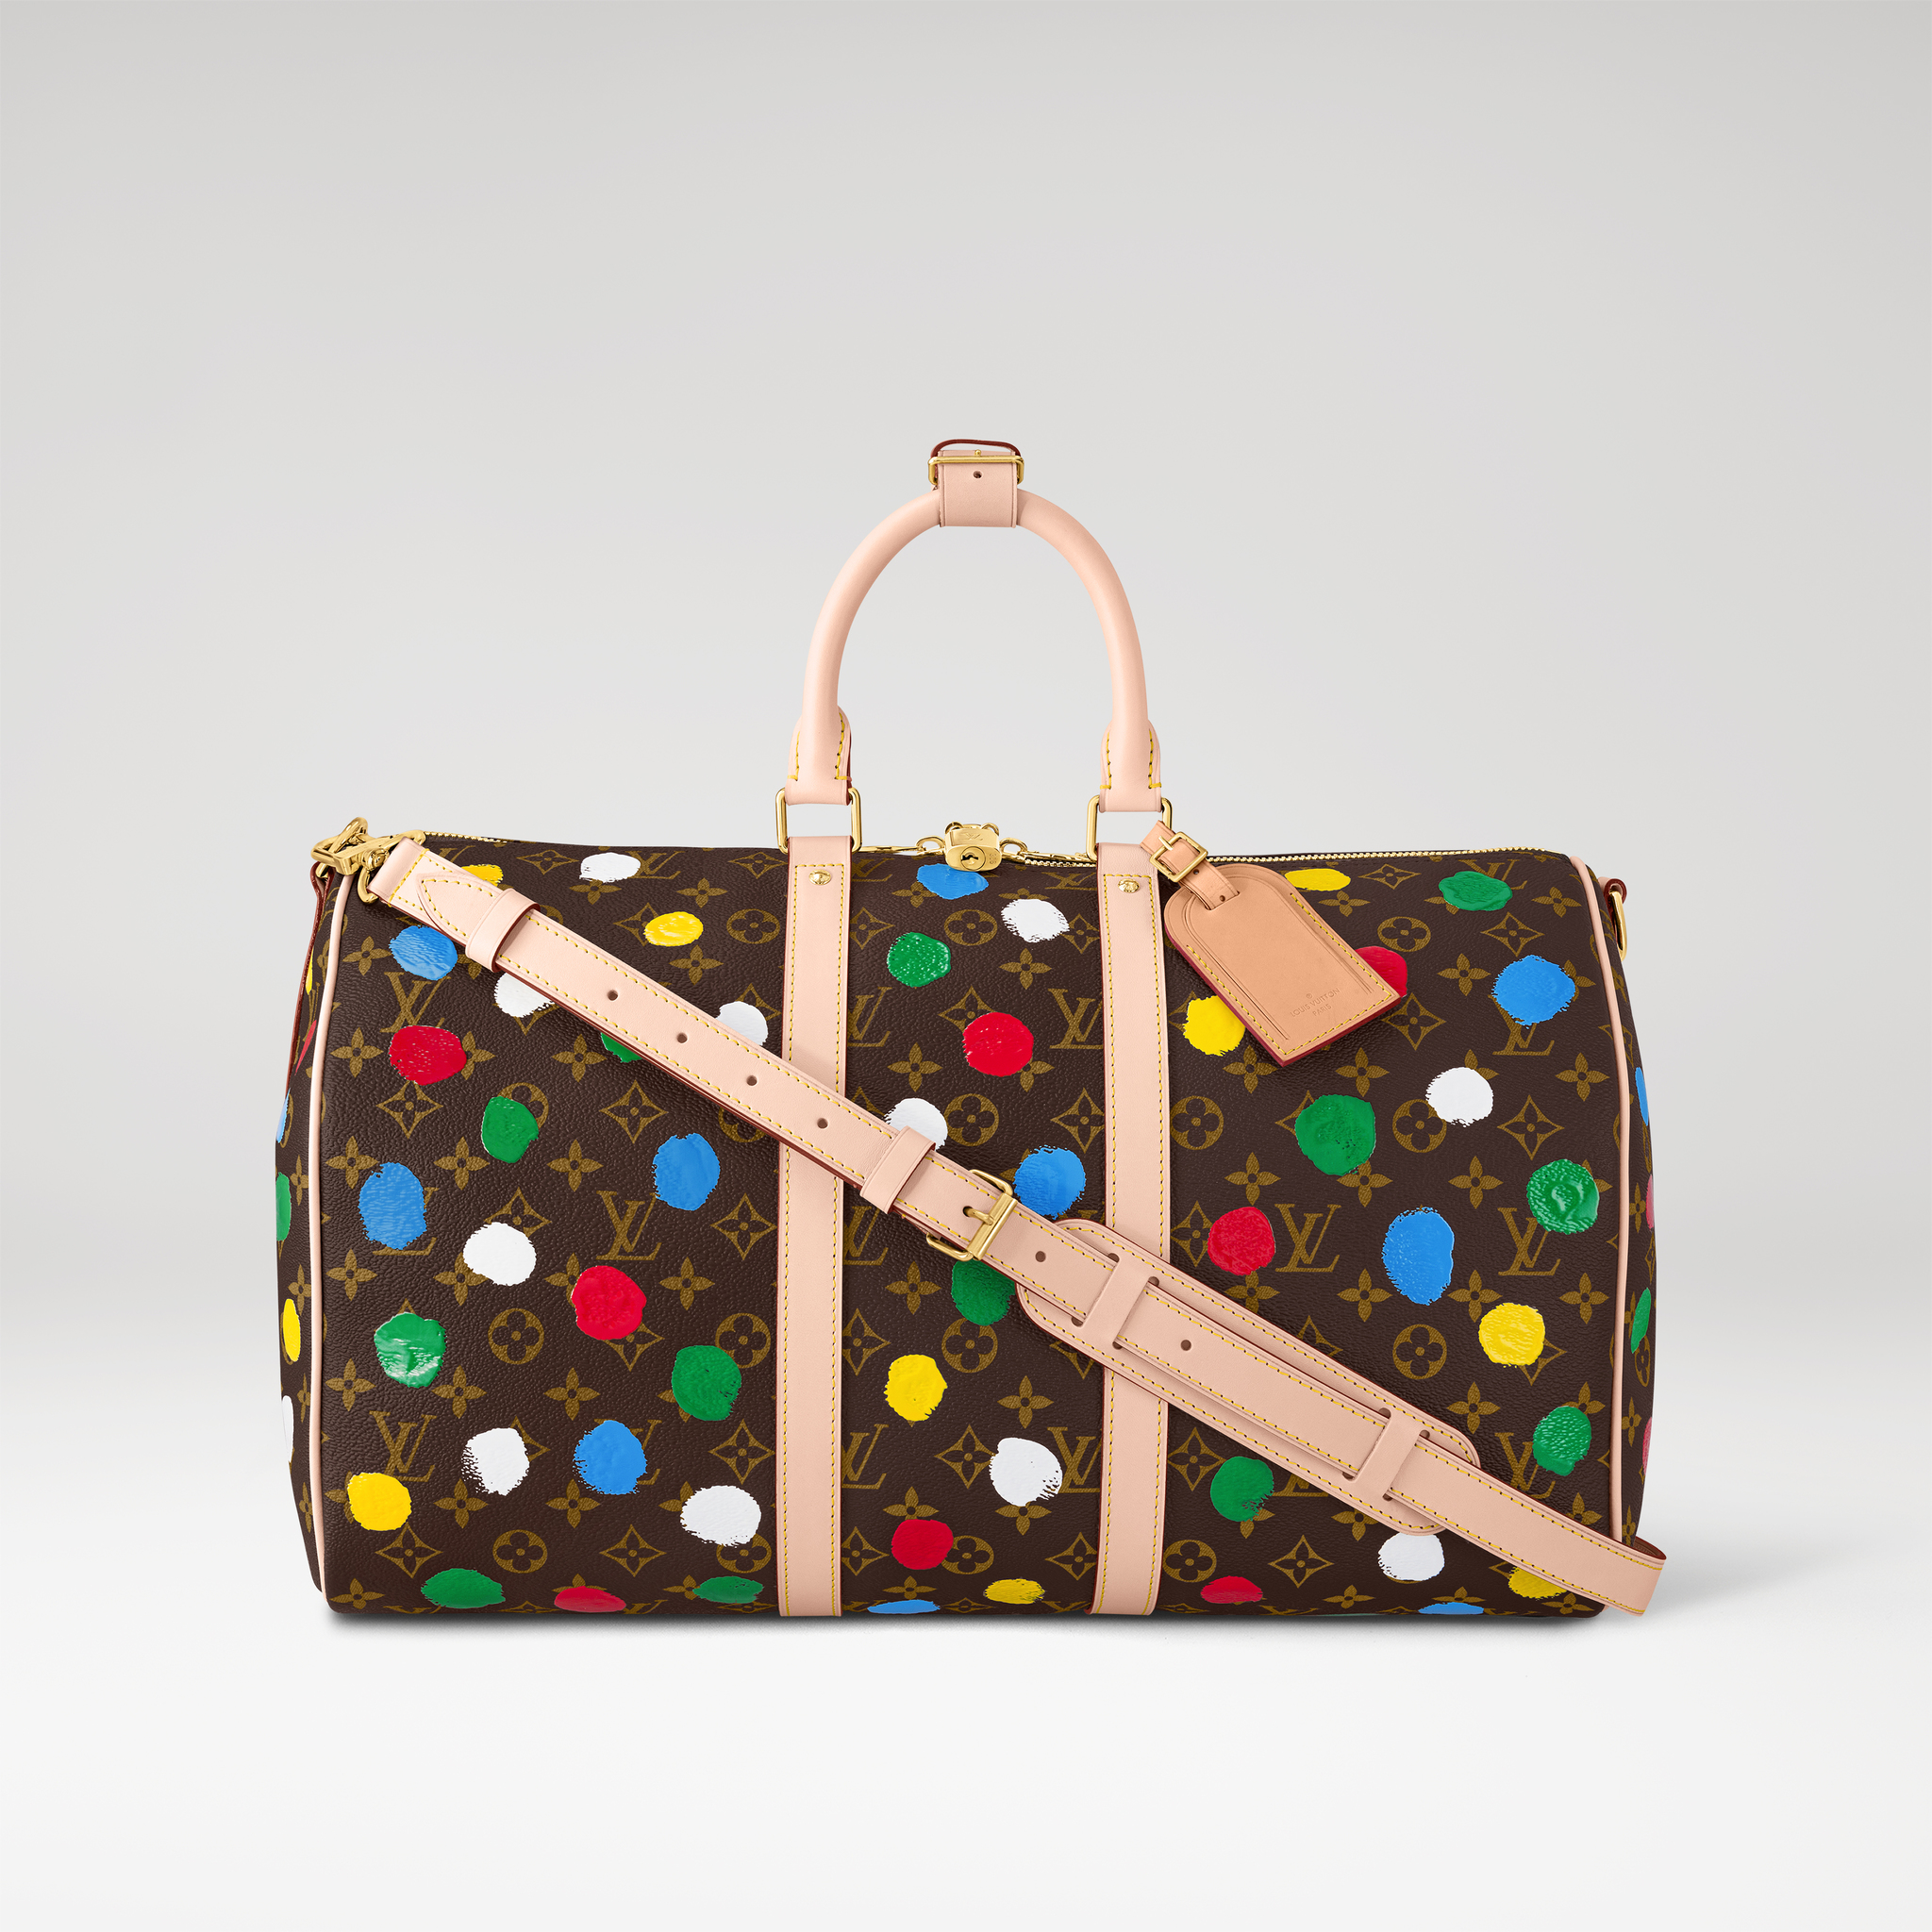 Bolso modelo Keepall con lona Monogram "Painted Dots" de la colección Louis Vuitton x Yayoi Kusama.